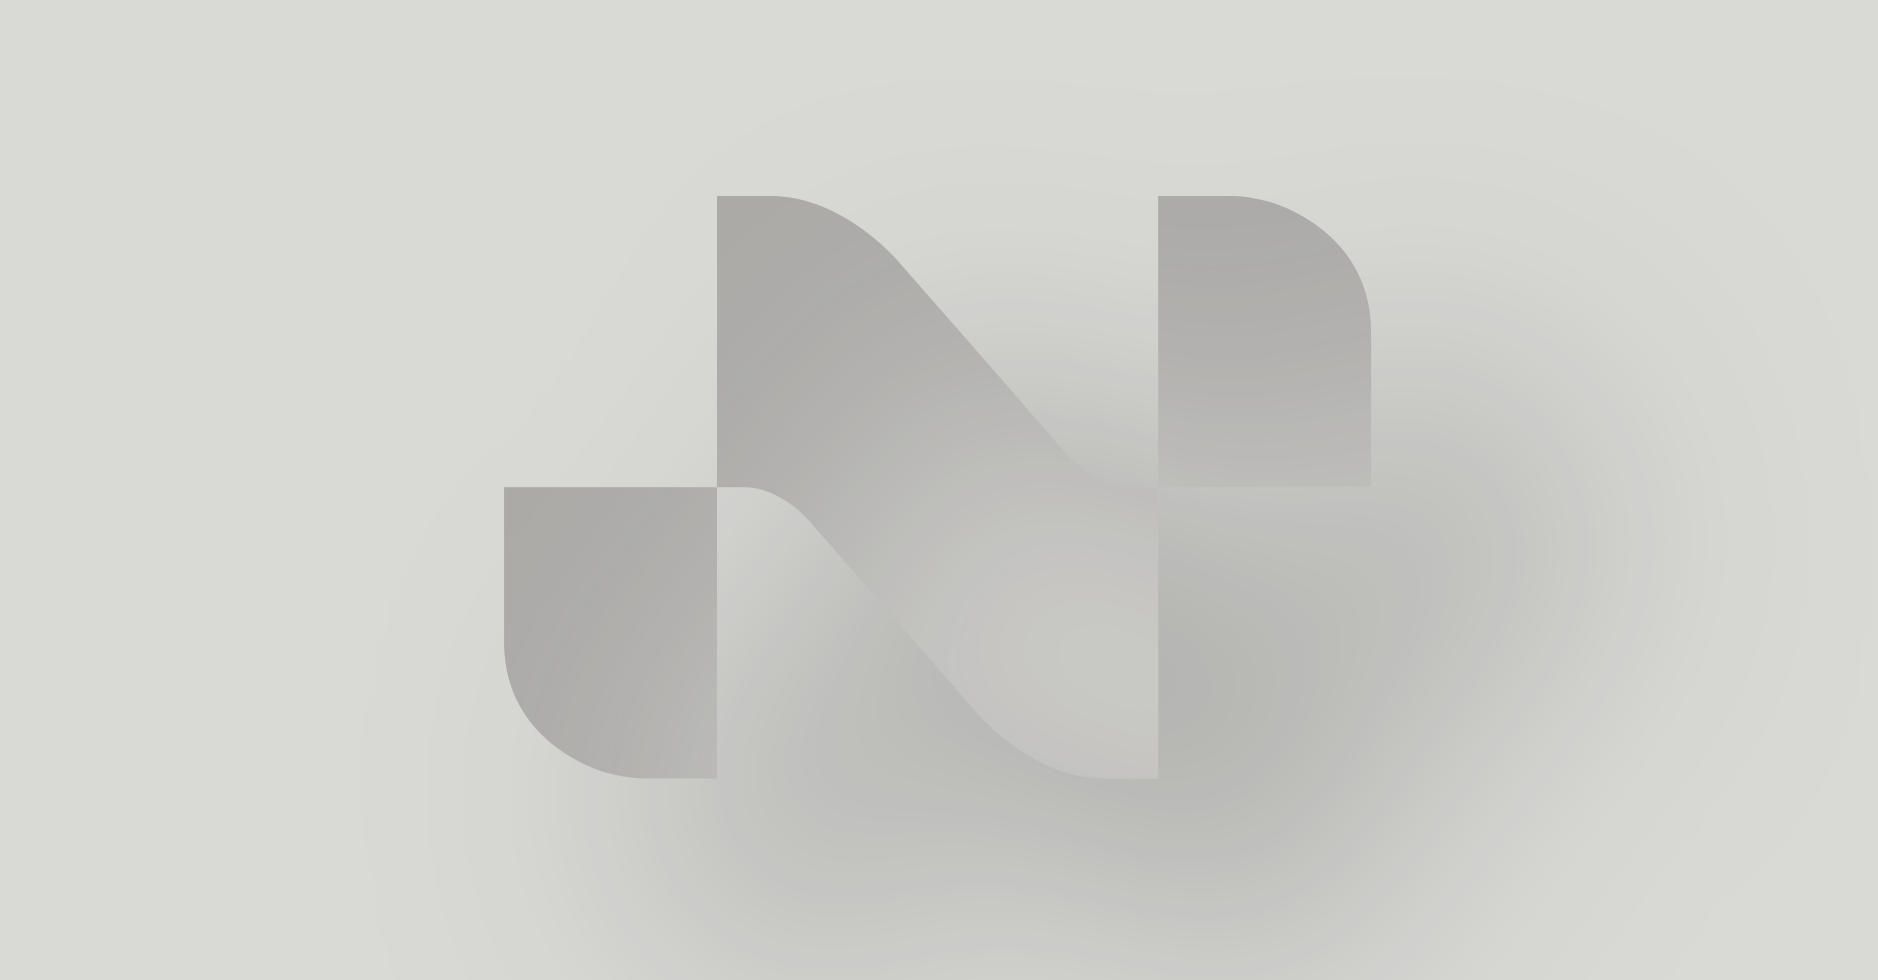 A thumbnail of the Netcraft logo